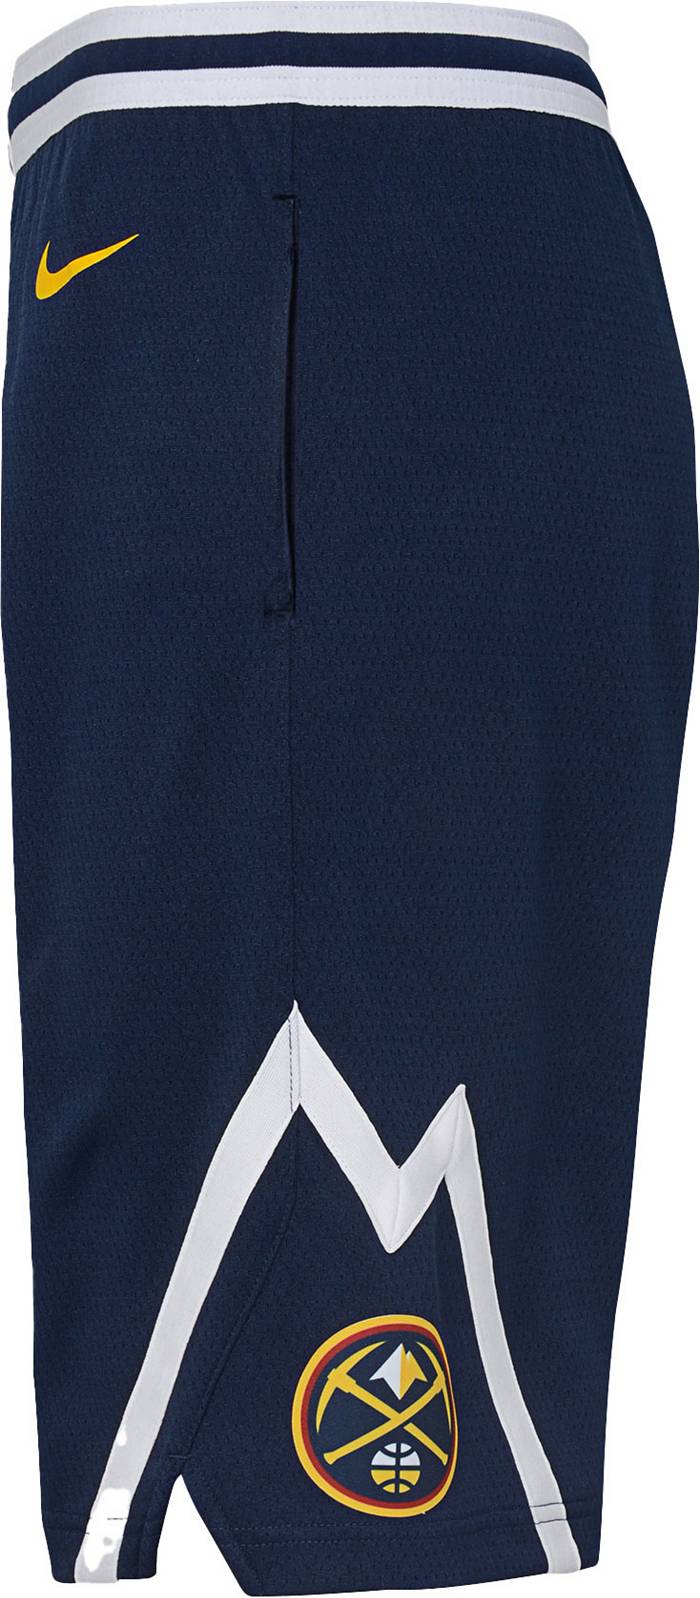 Nike Men's Denver Nuggets Nikola Jokic #15 Navy Dri-Fit Swingman Jersey, Medium, Blue